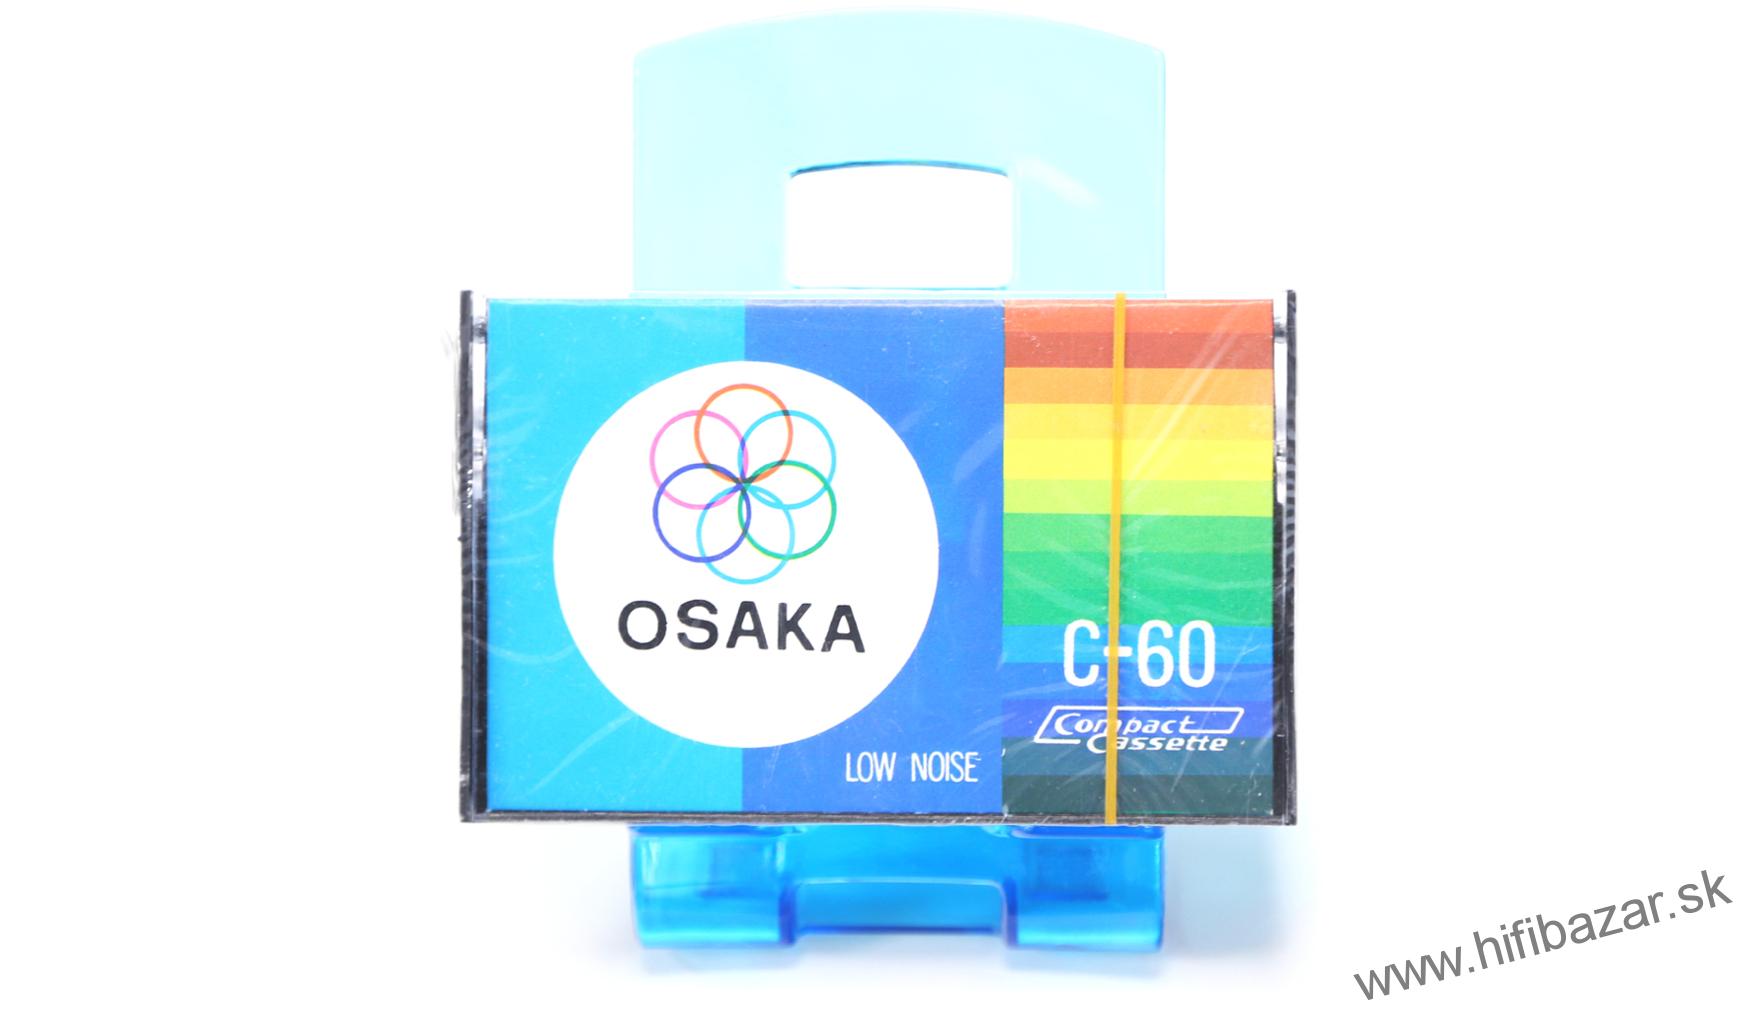 OSAKA C-60 Position Normal